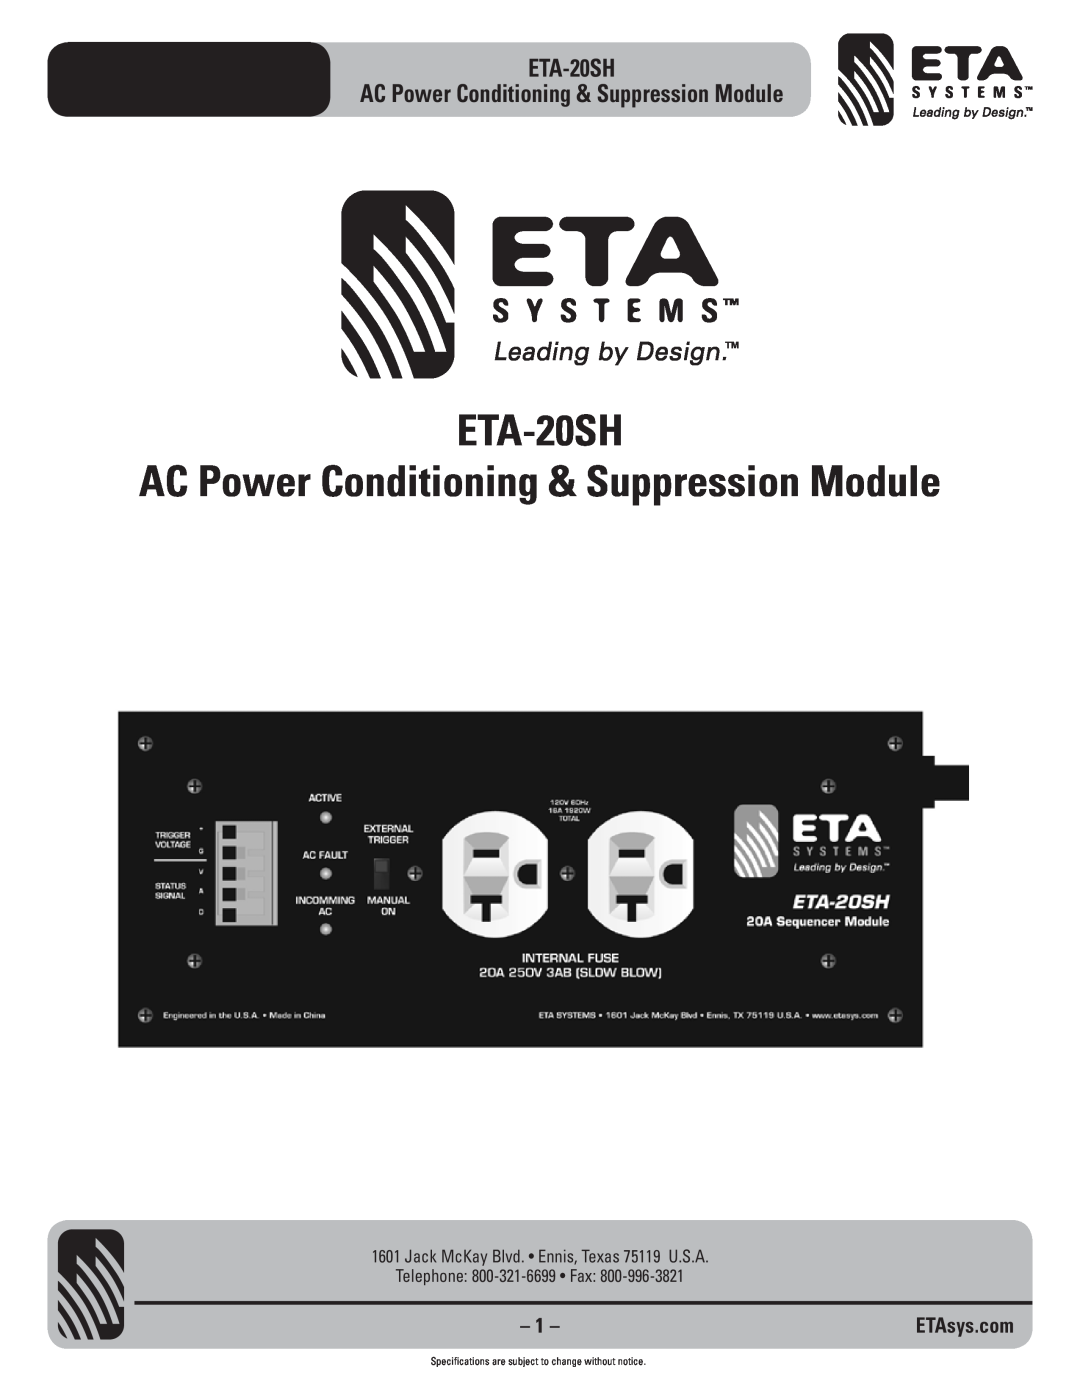 ETA Systems specifications ETA-20SH AC Power Conditioning & Suppression Module, Telephone 800-321-6699 Fax, ETAsys.com 